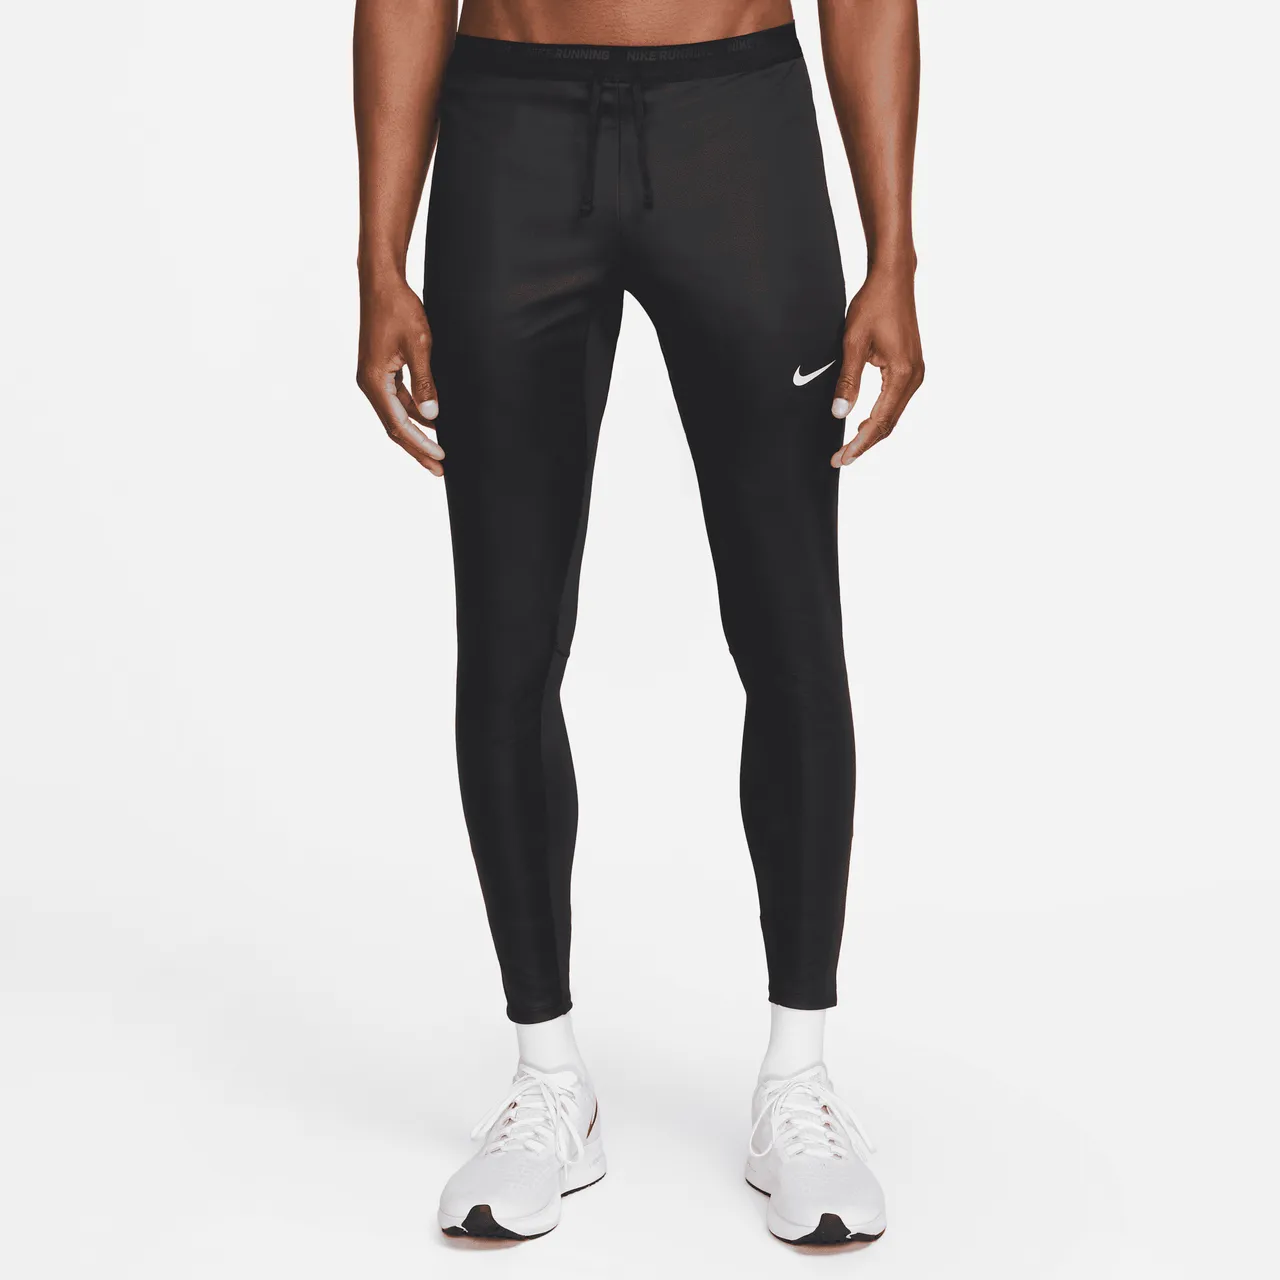 Nike Storm-FIT Phenom Elite Men's Running Tights - Black - Polyester